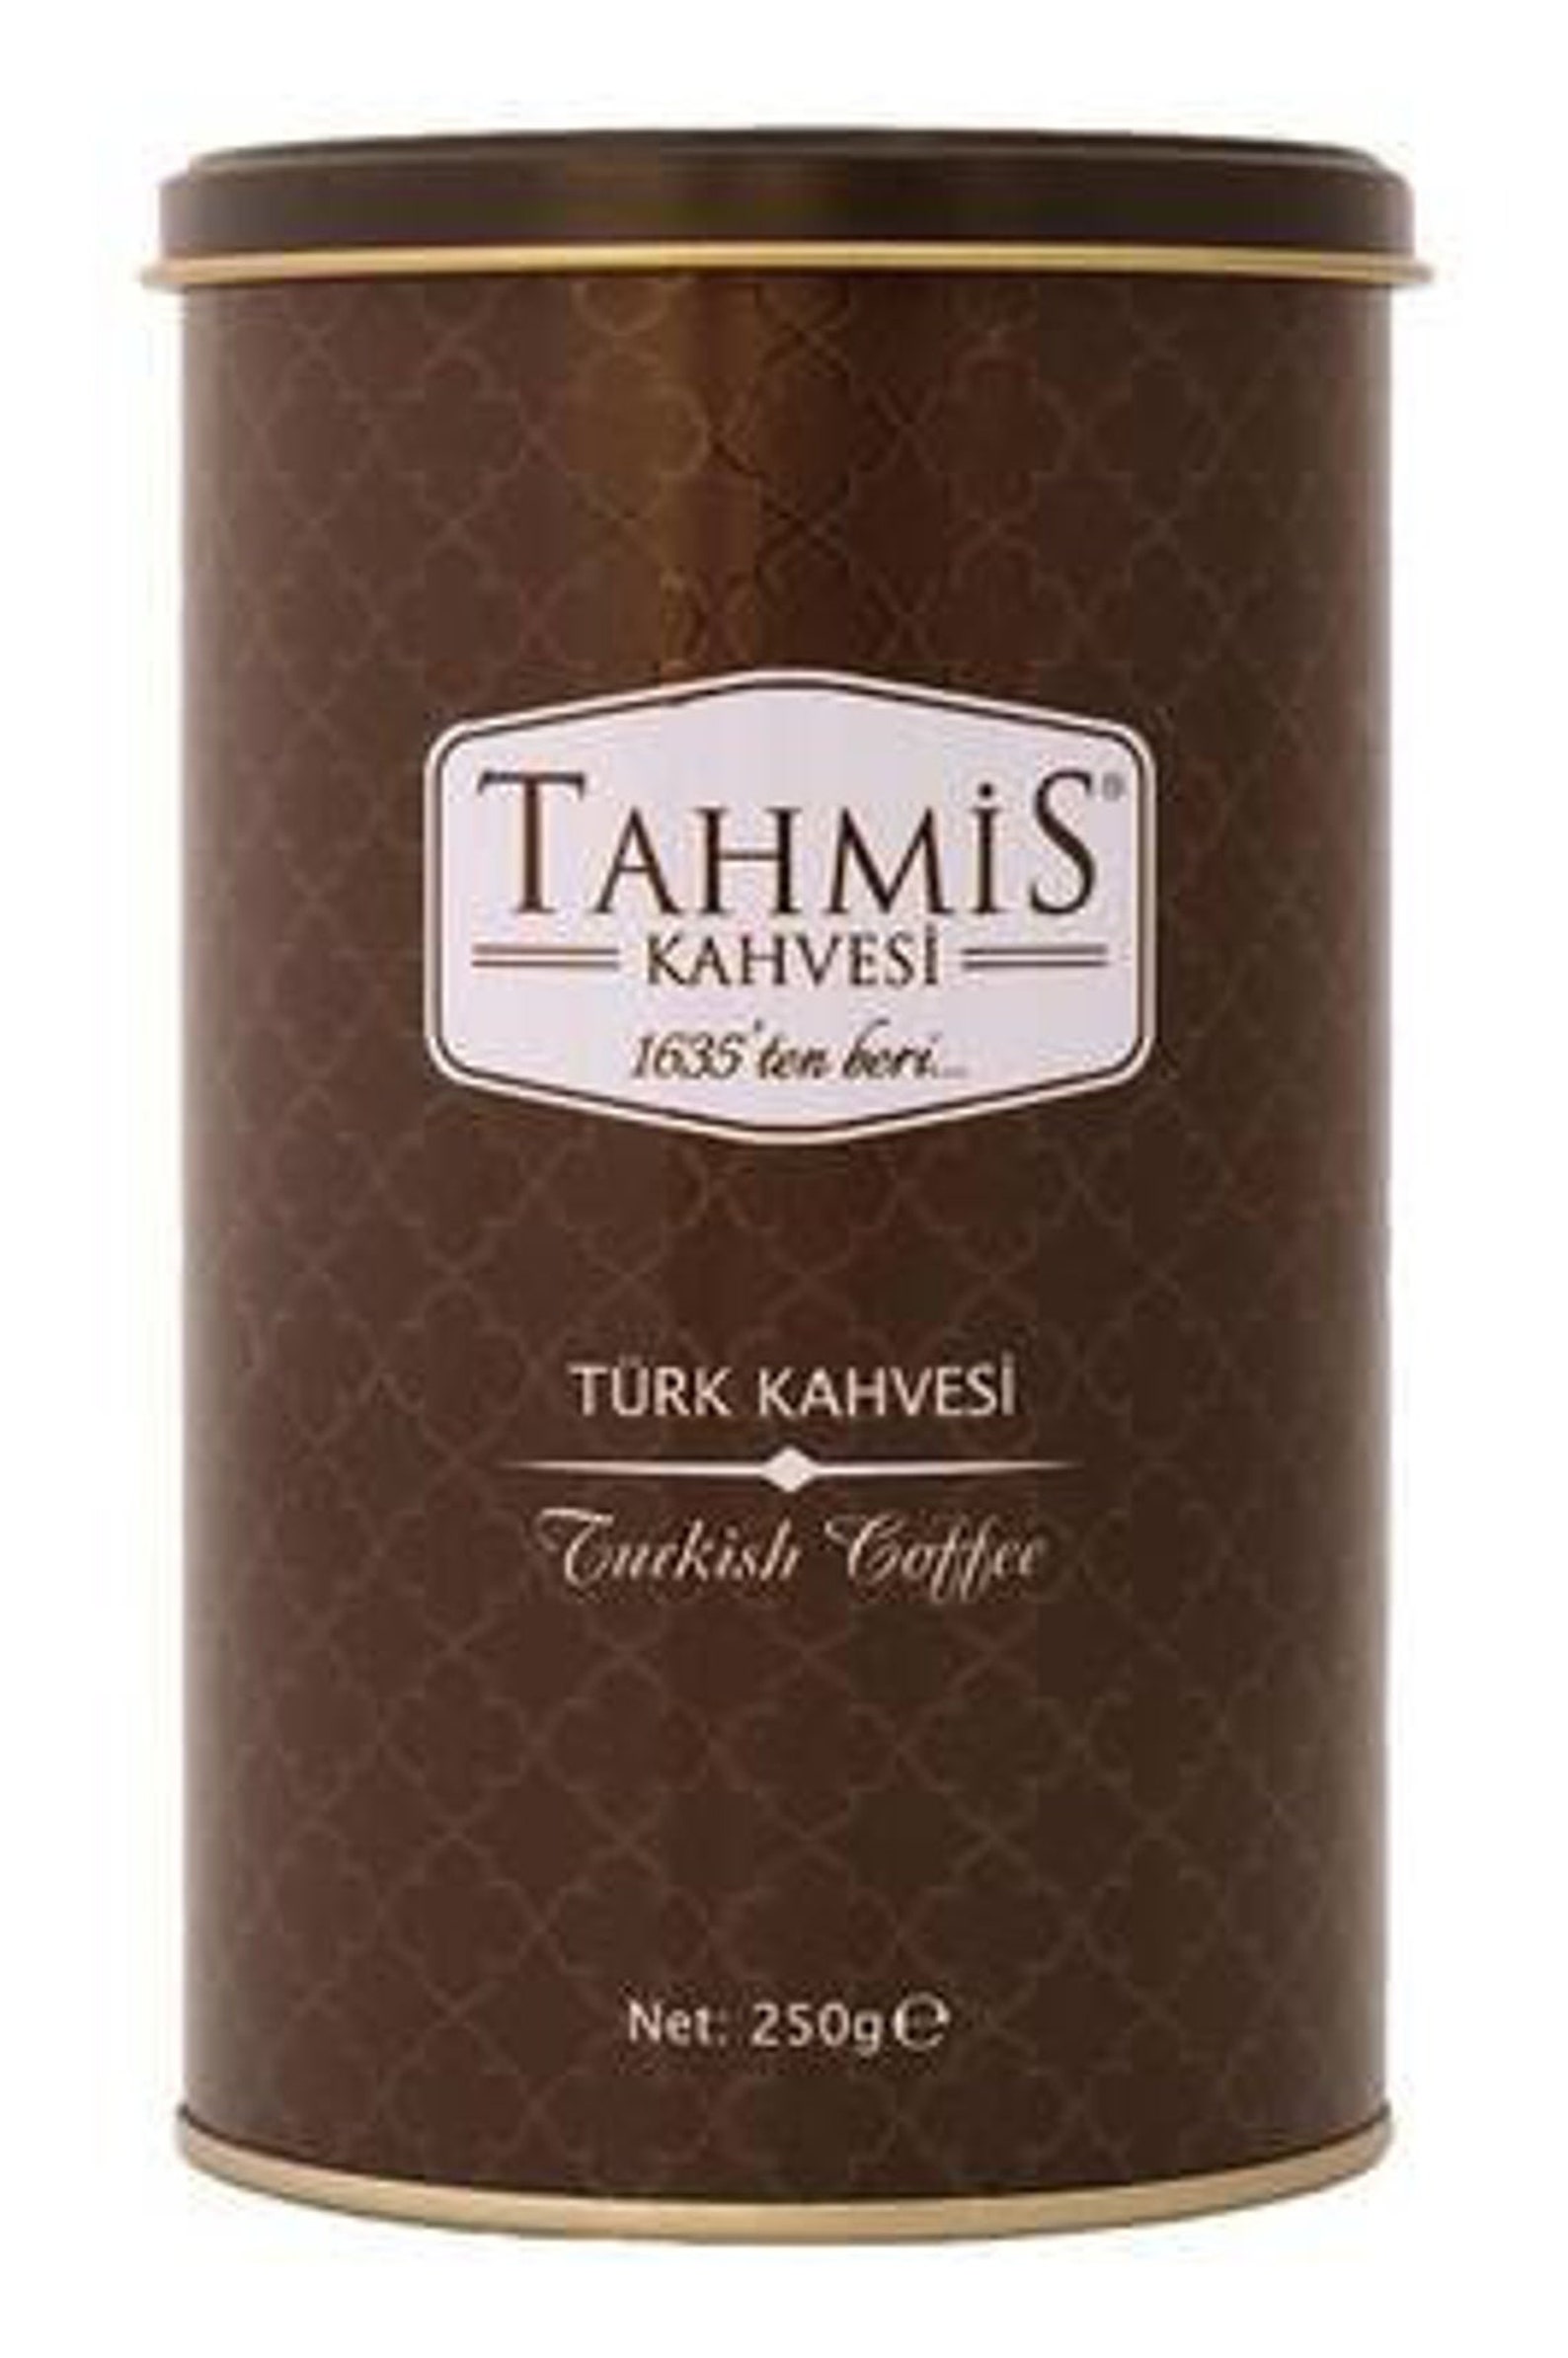 Best Quality Turkish Coffee Turkish Ground Coffee Tahmis